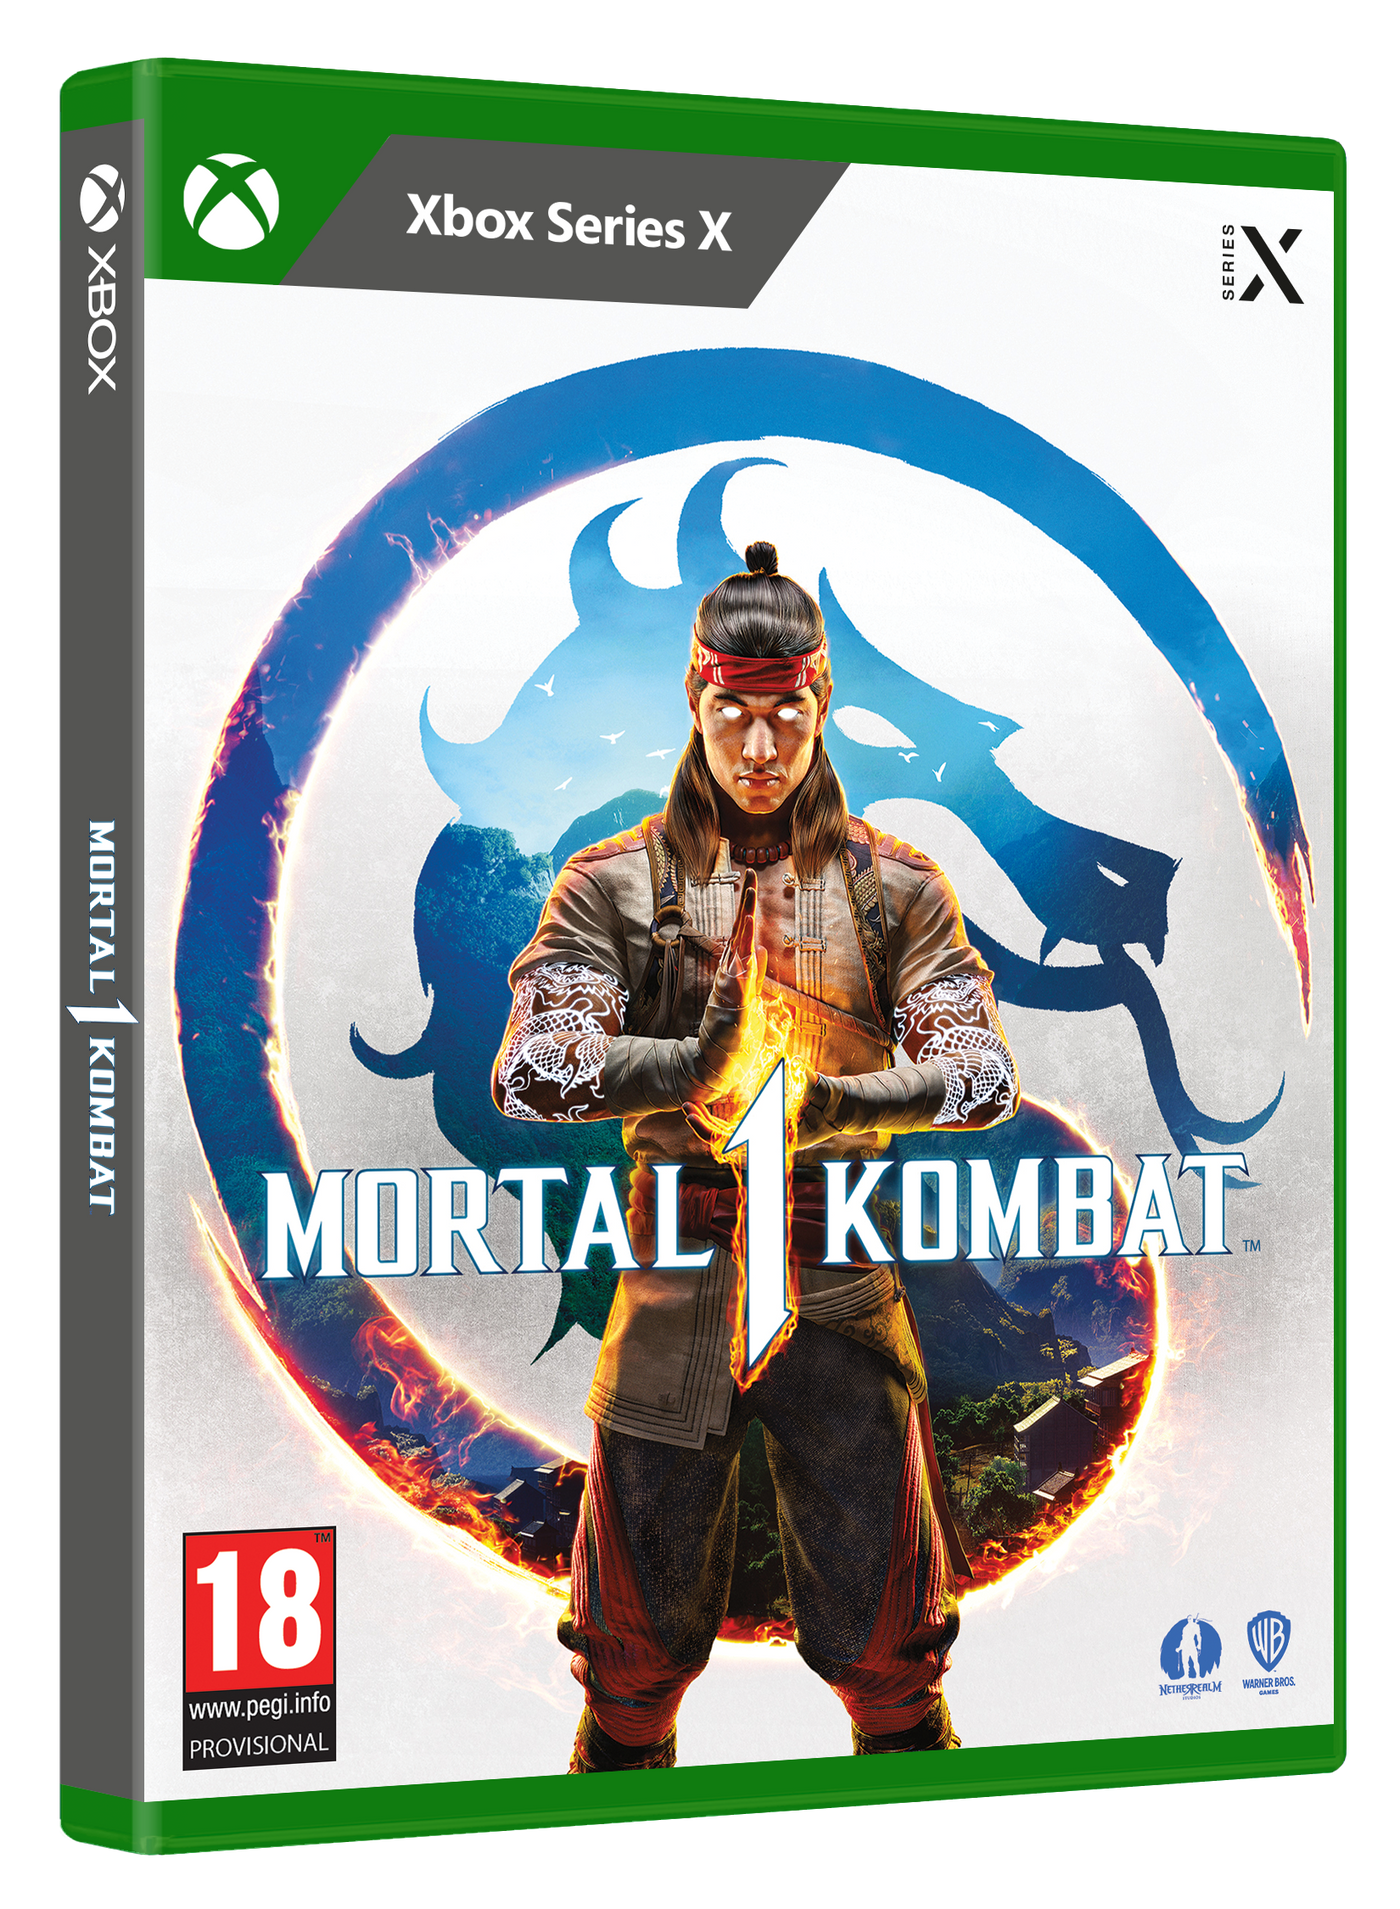 Mortal Kombat 1: Standard Edition for Xbox Series X|S